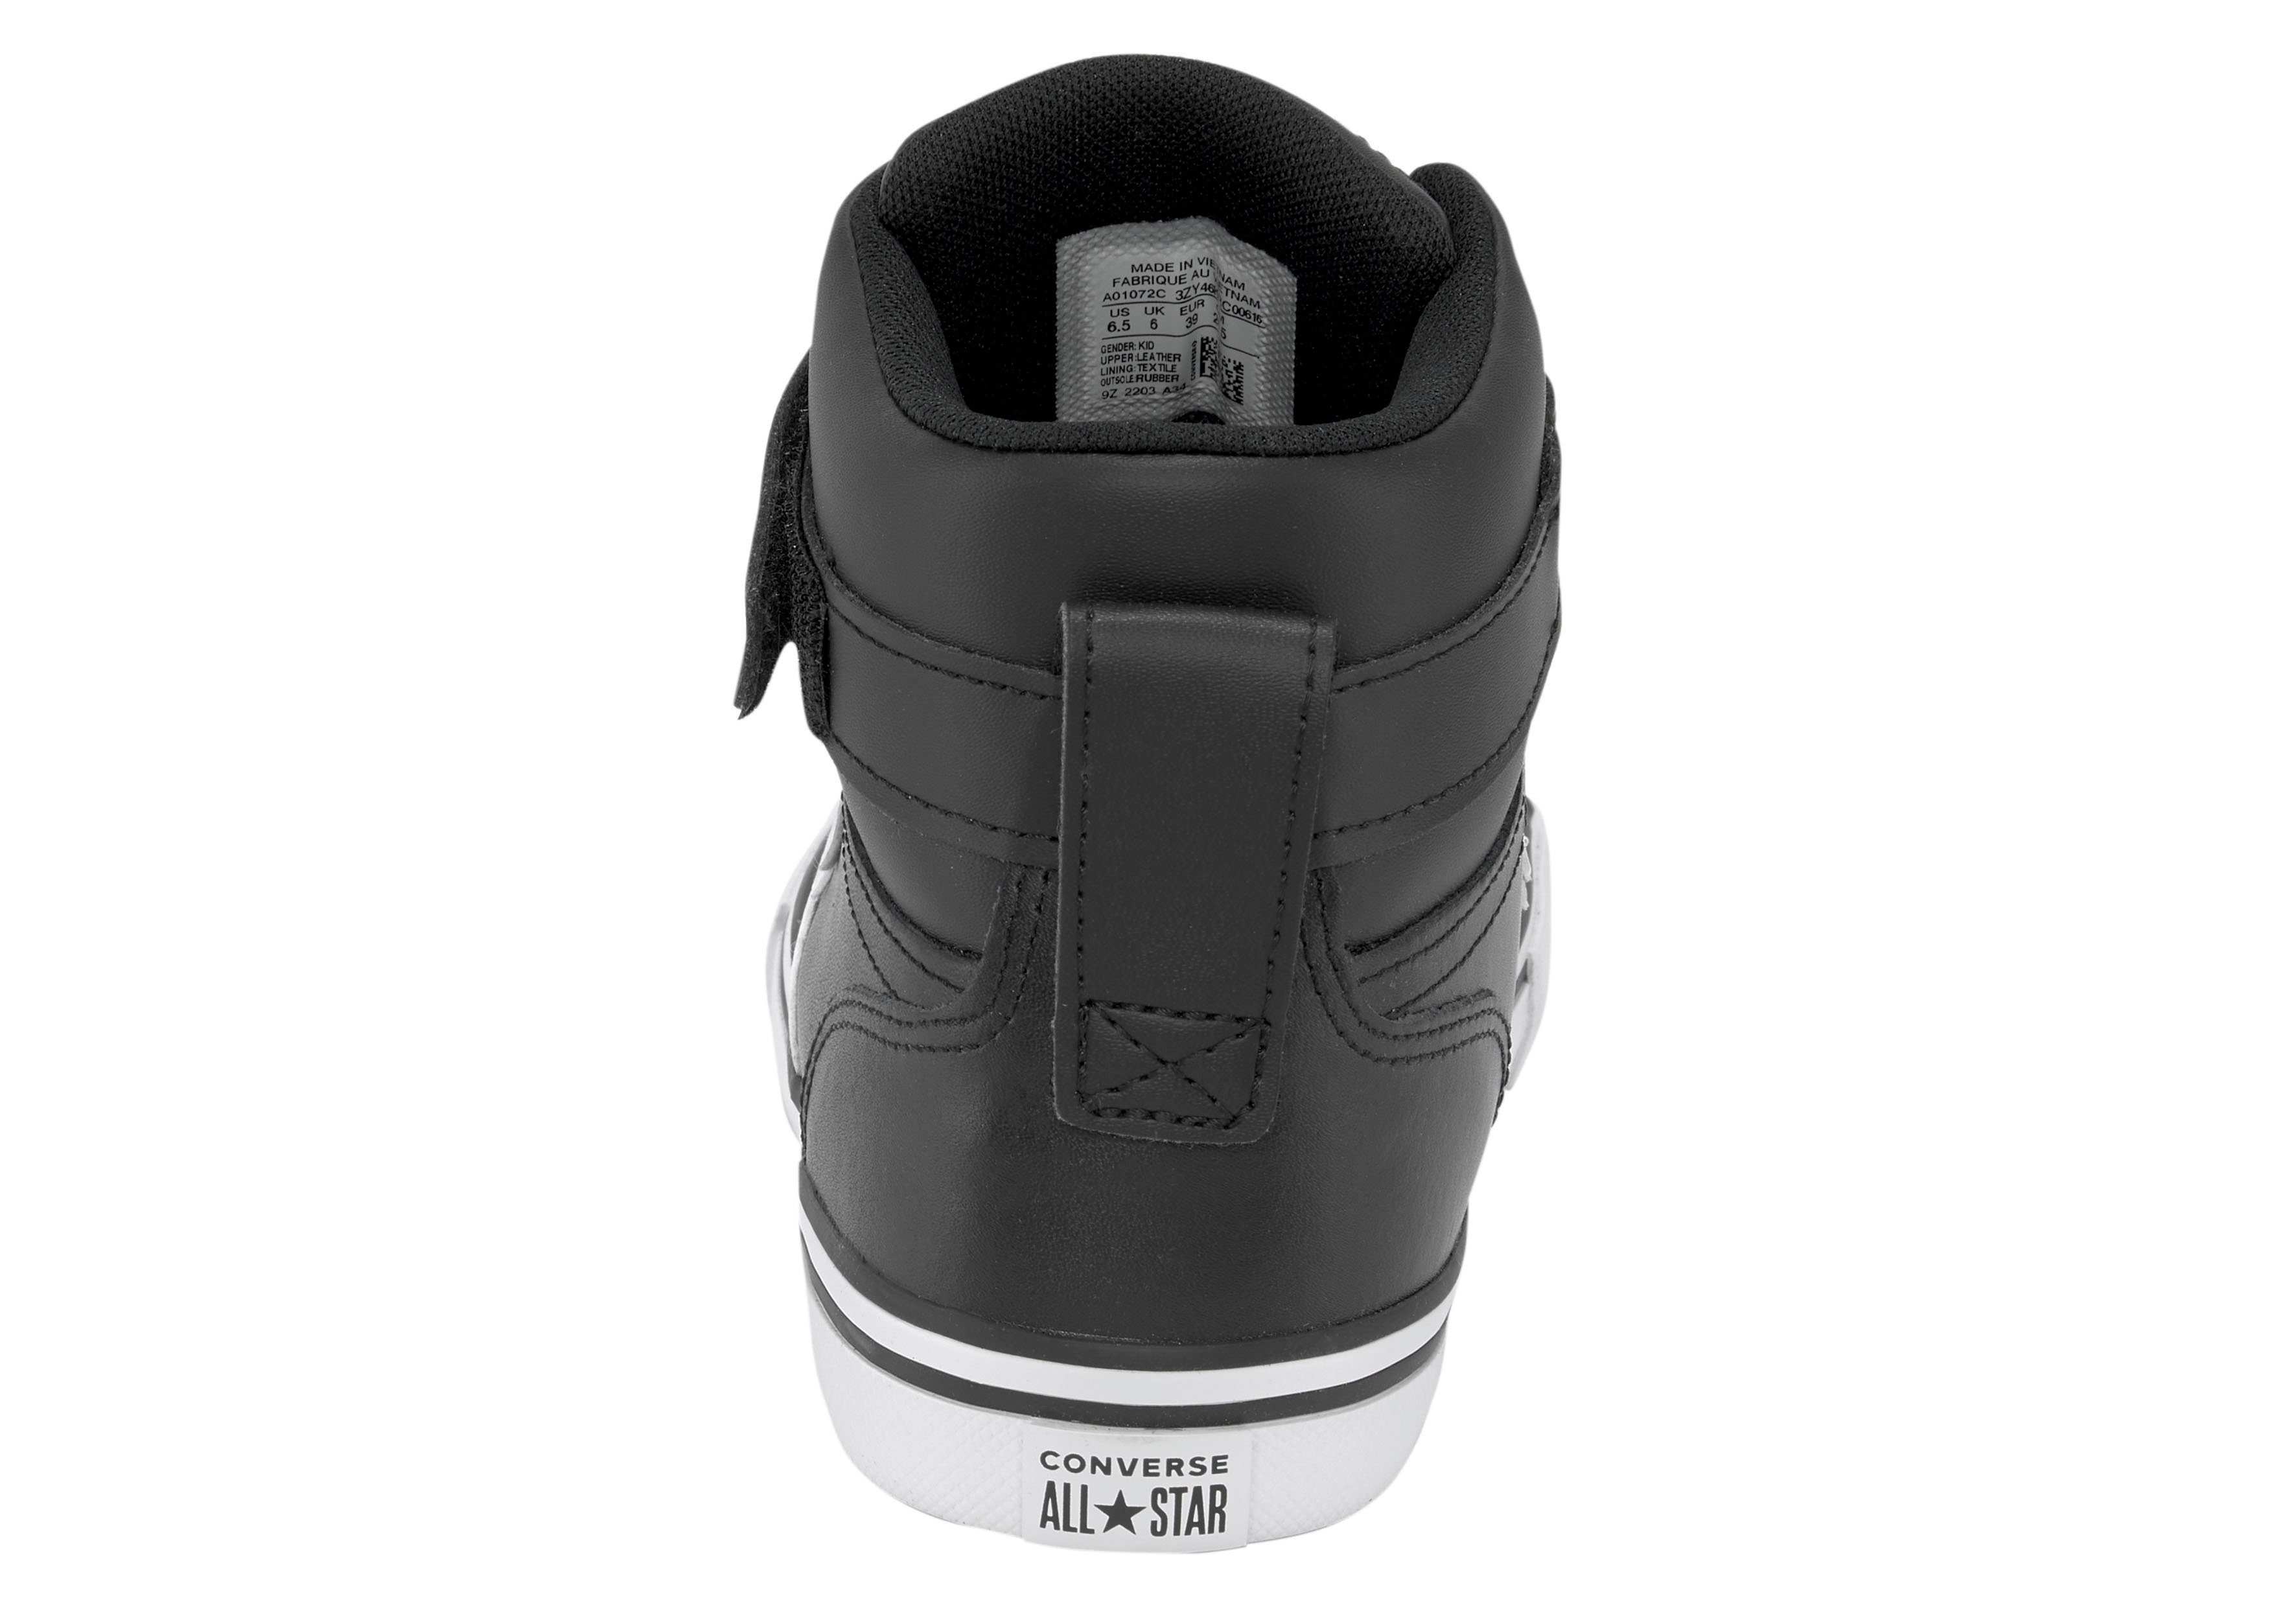 BLAZE schwarz-weiß Sneaker STRAP PRO Converse LEATHER